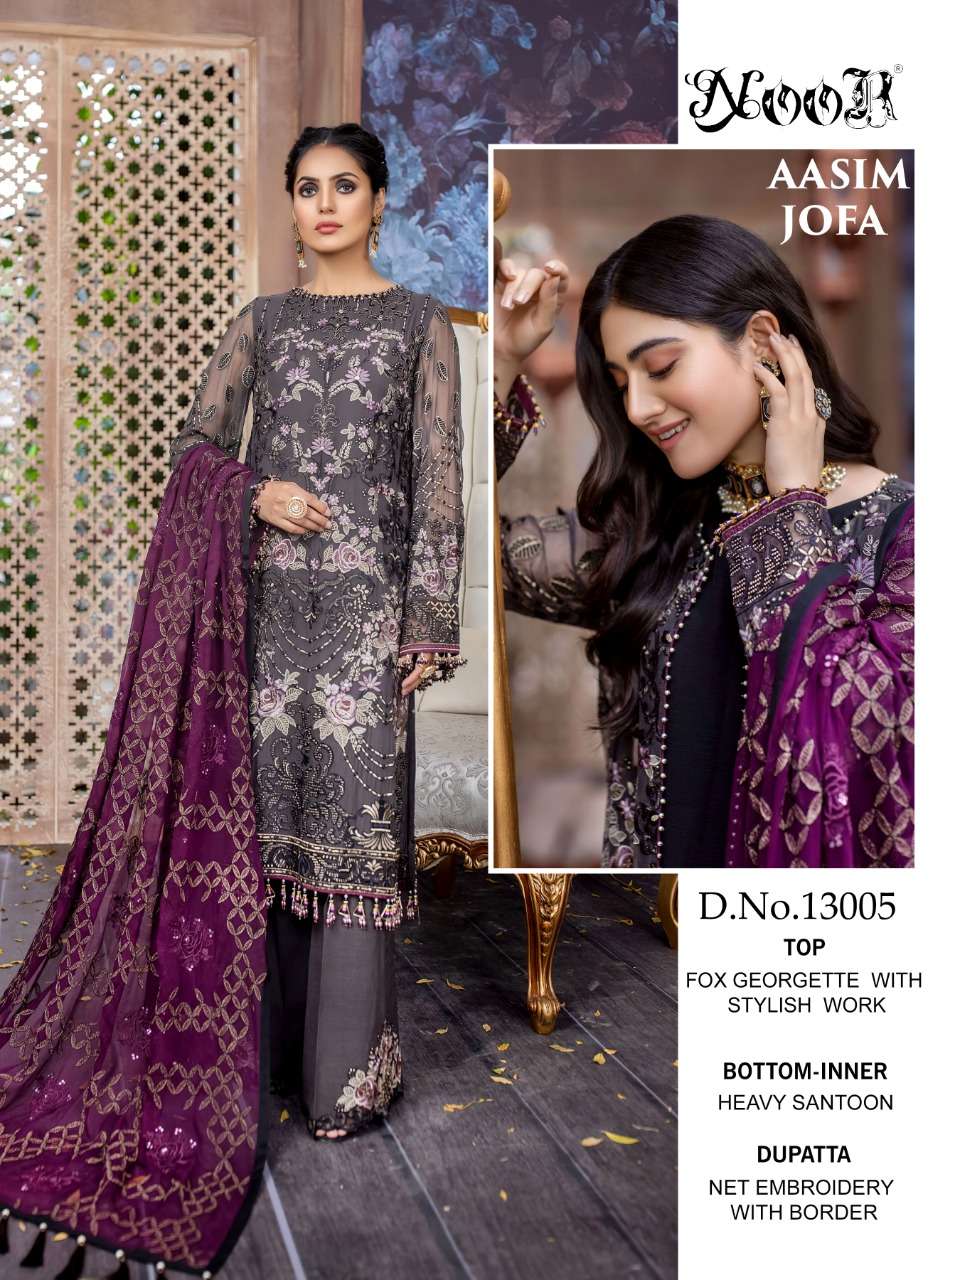 Noor aasim jofa designer georgette with embroidery work pakistani dress ...